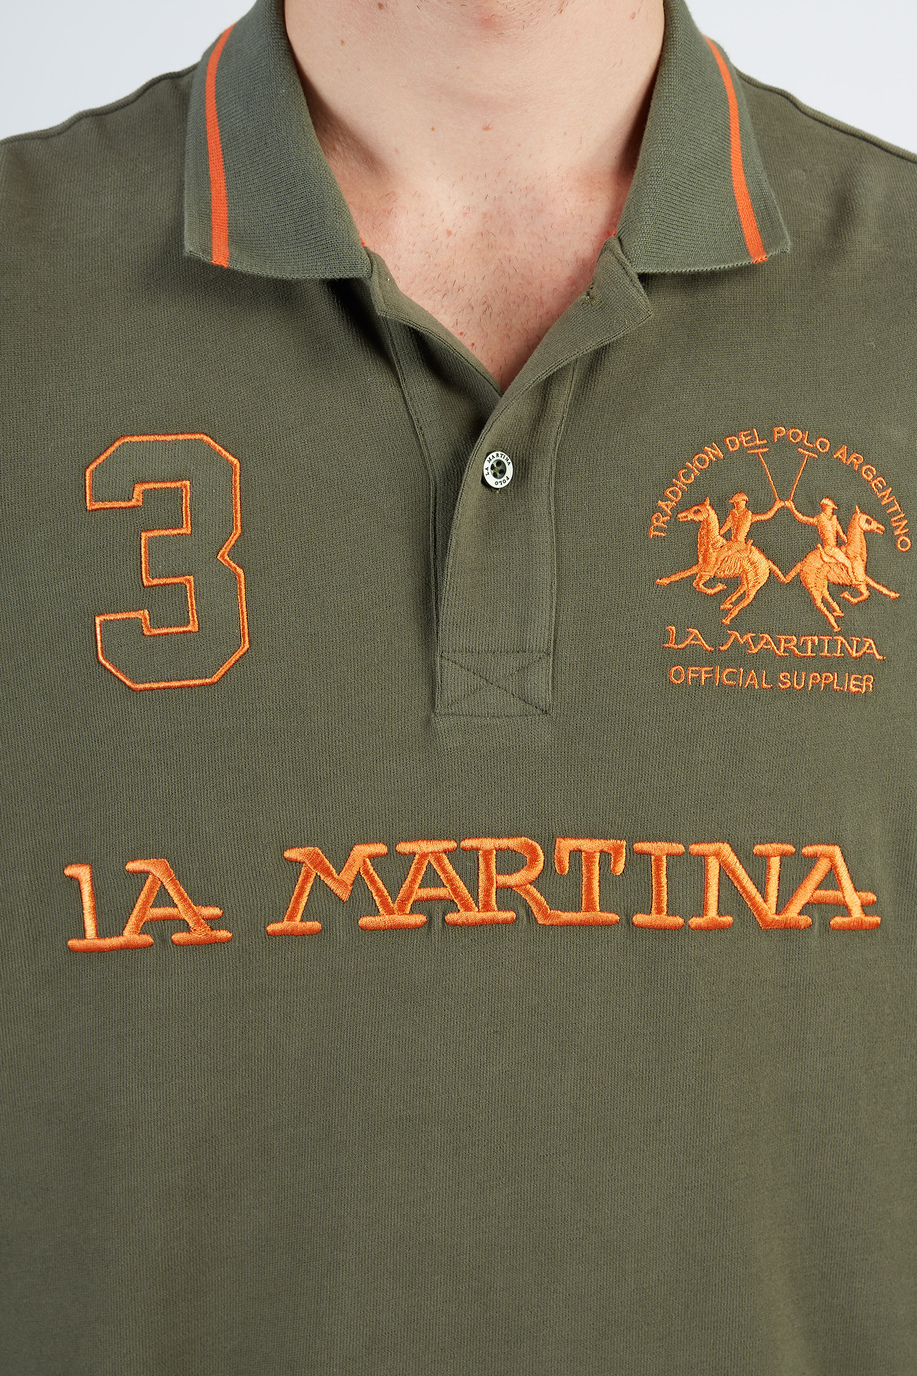 Polo da uomo a maniche lunghe in cotone 100% regular fit - Best Seller | La Martina - Official Online Shop